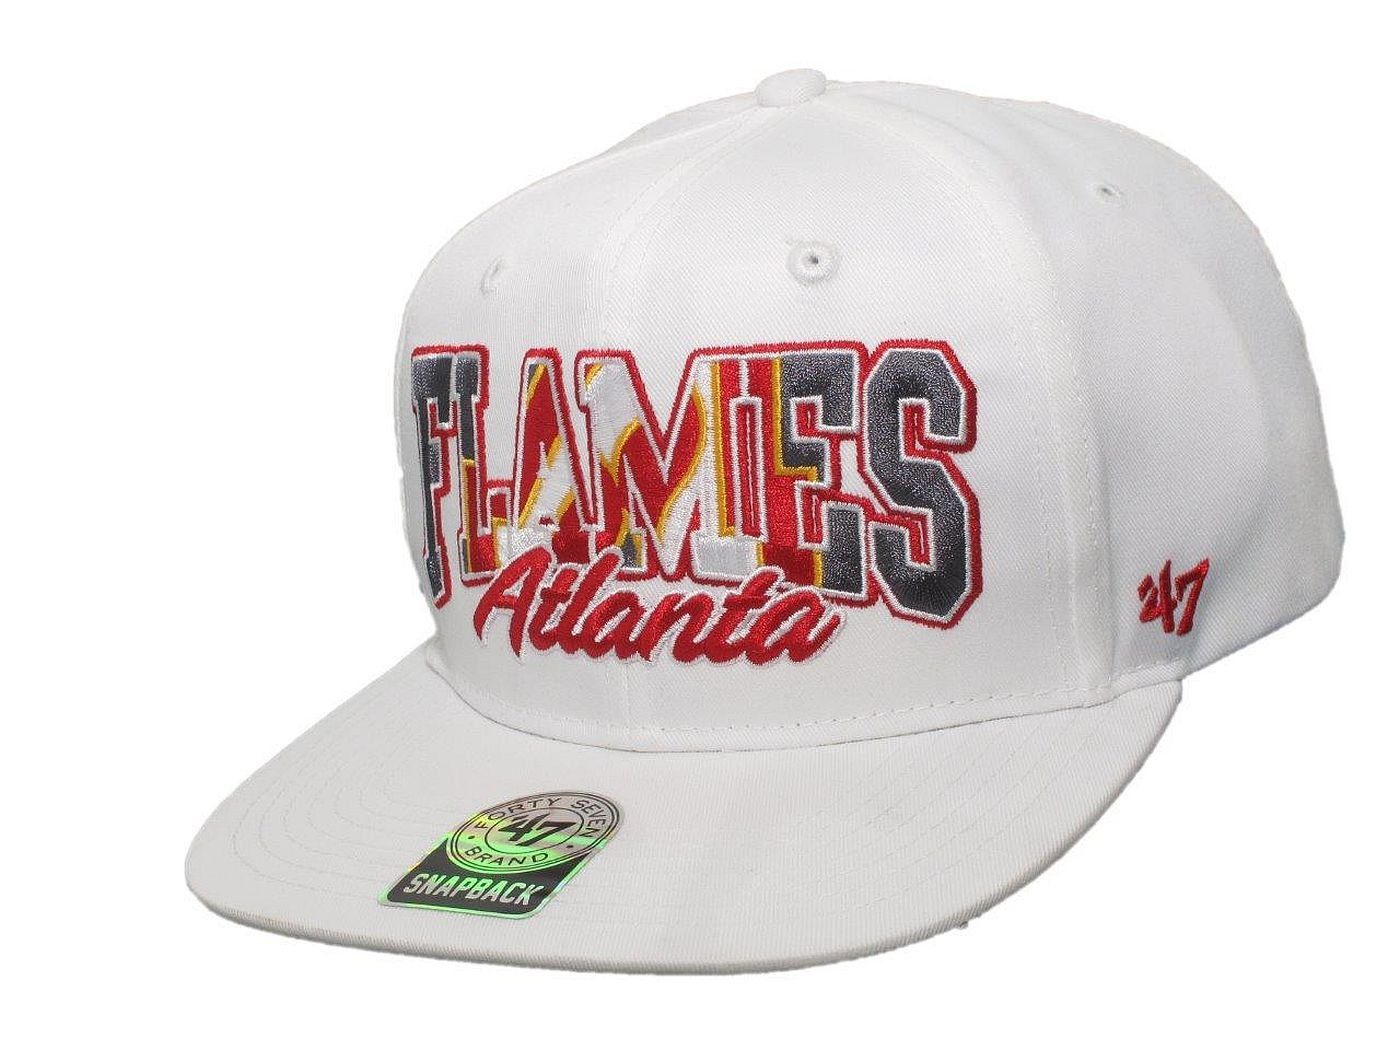 Brand 47 "Atlanta Baseball Eishockey Cap Brand - '47 Flames" Kappe Cap NHL Basecap Mütze